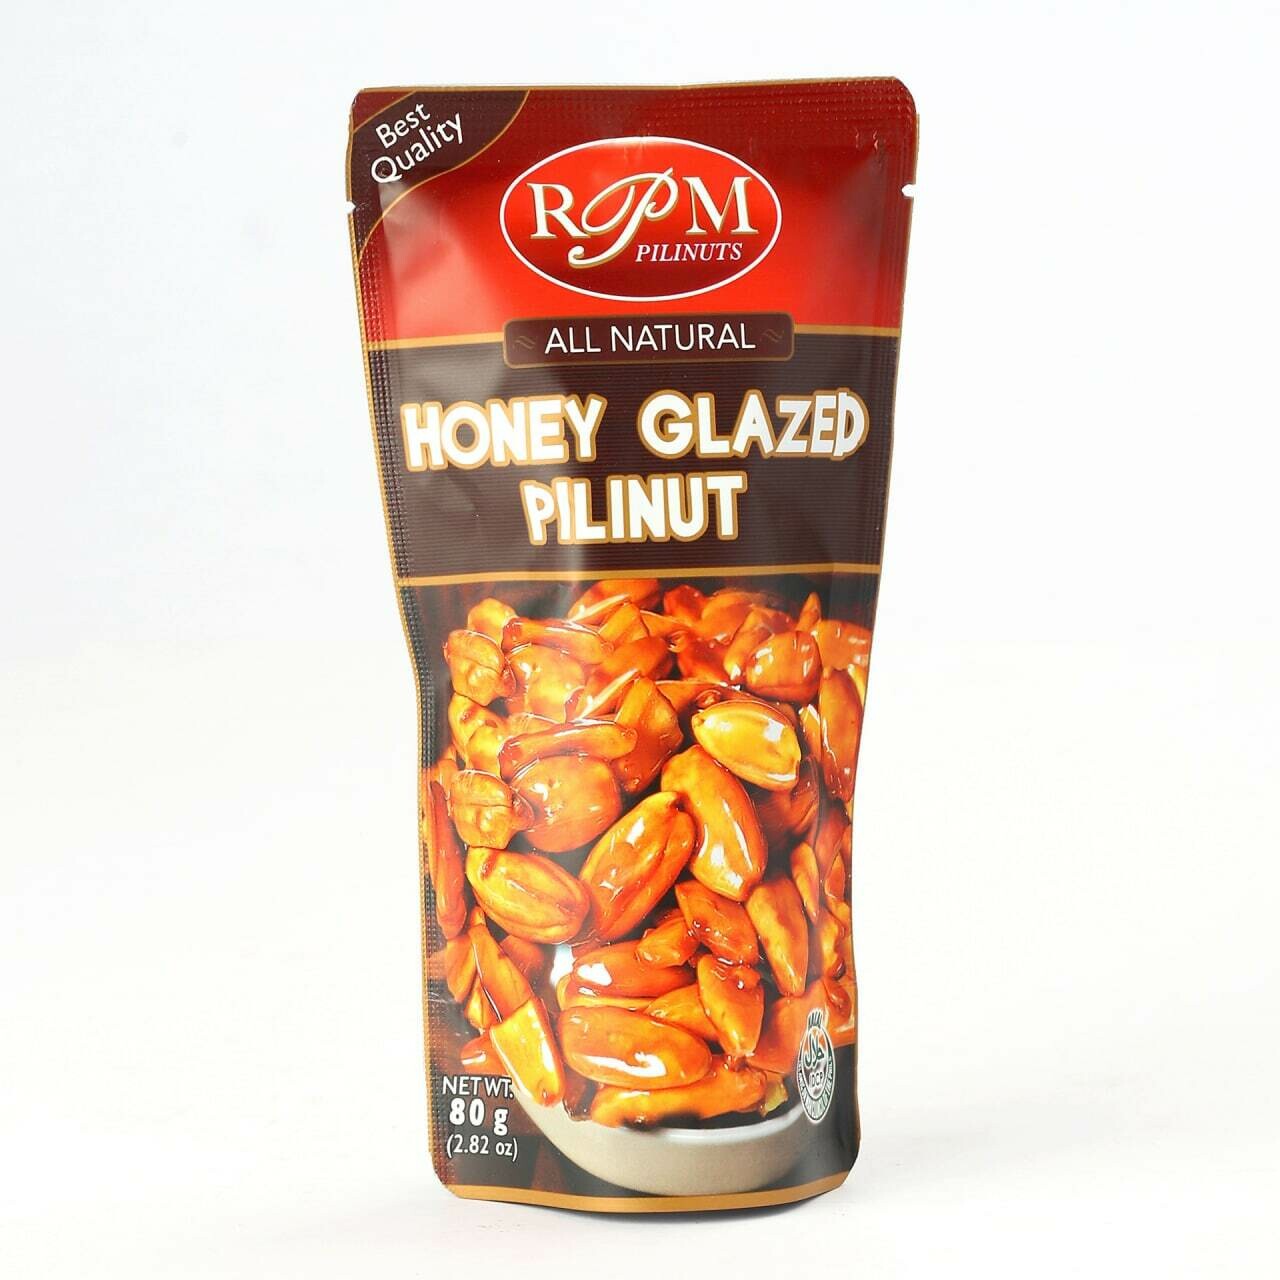 RPM Pili nuts - Honey Glazed Pili Nuts